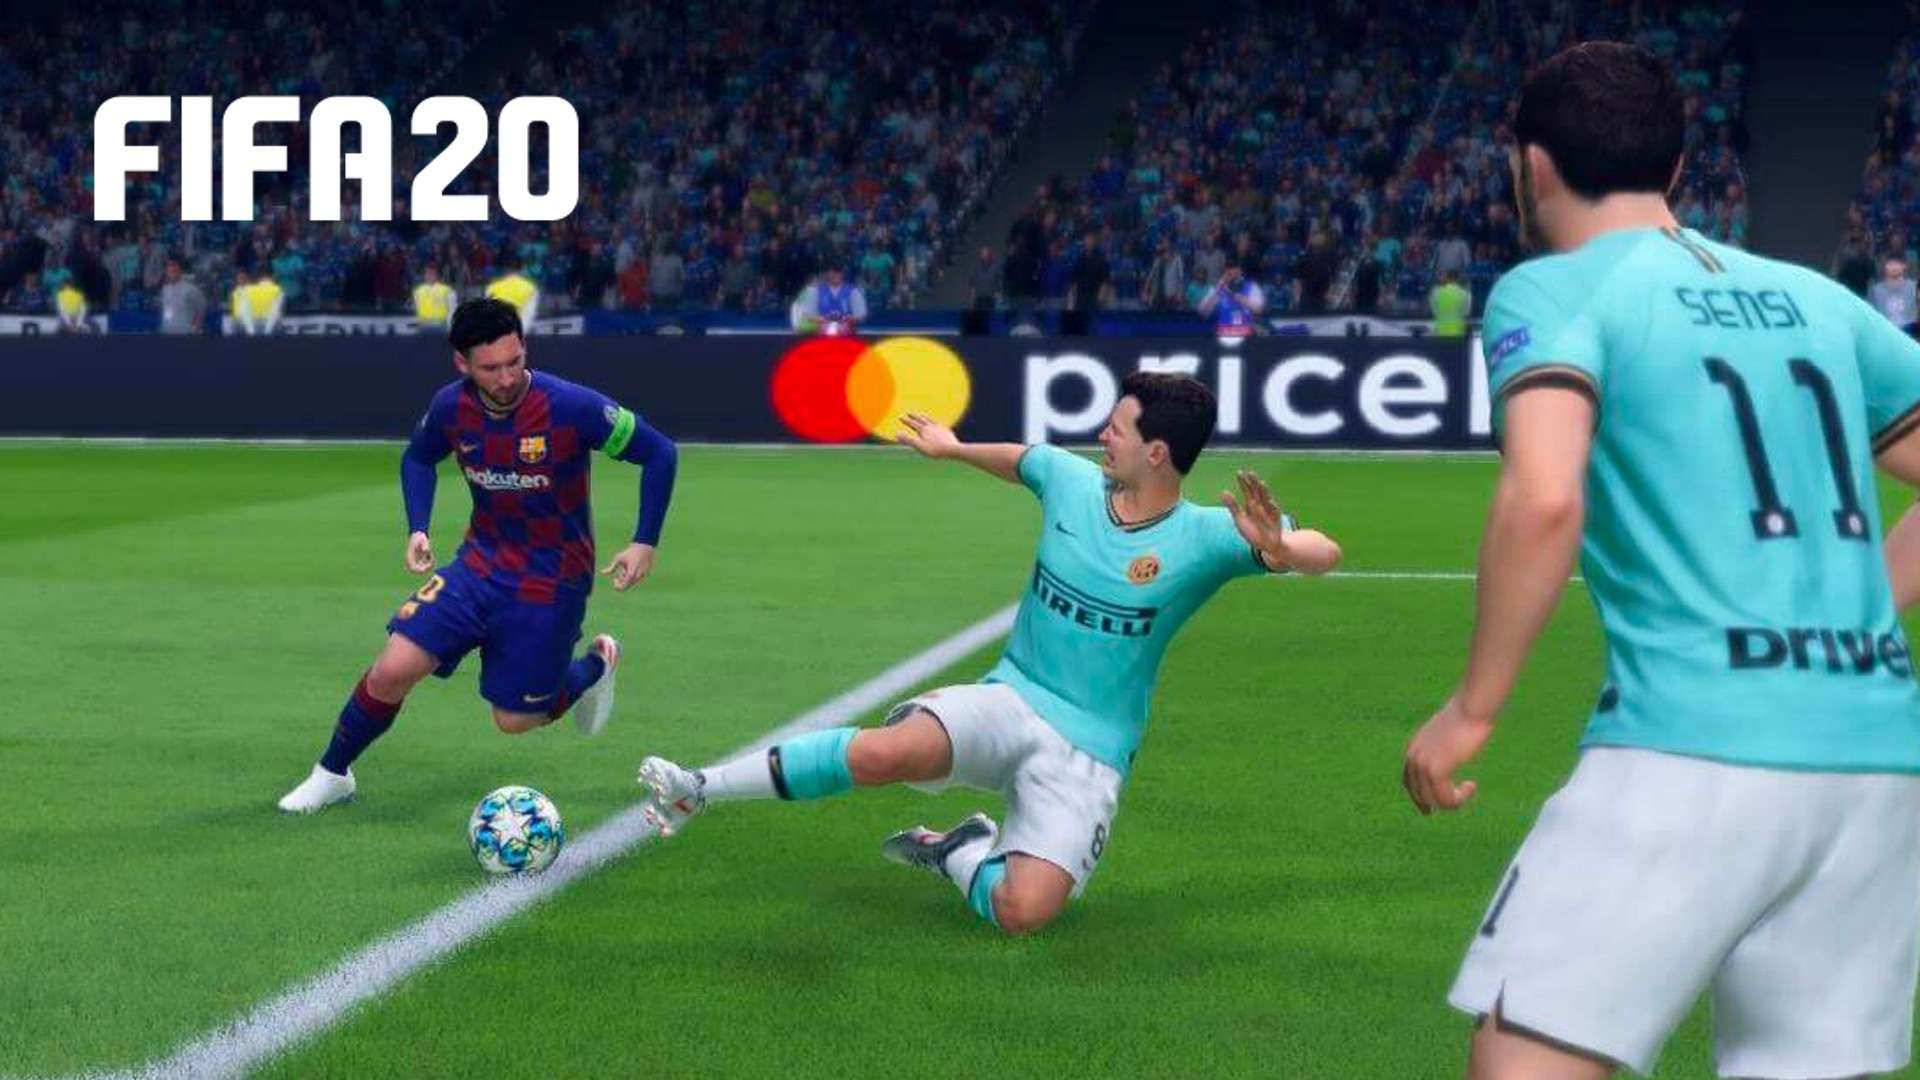 FIFA 20 player slide tackling Lionel Messi